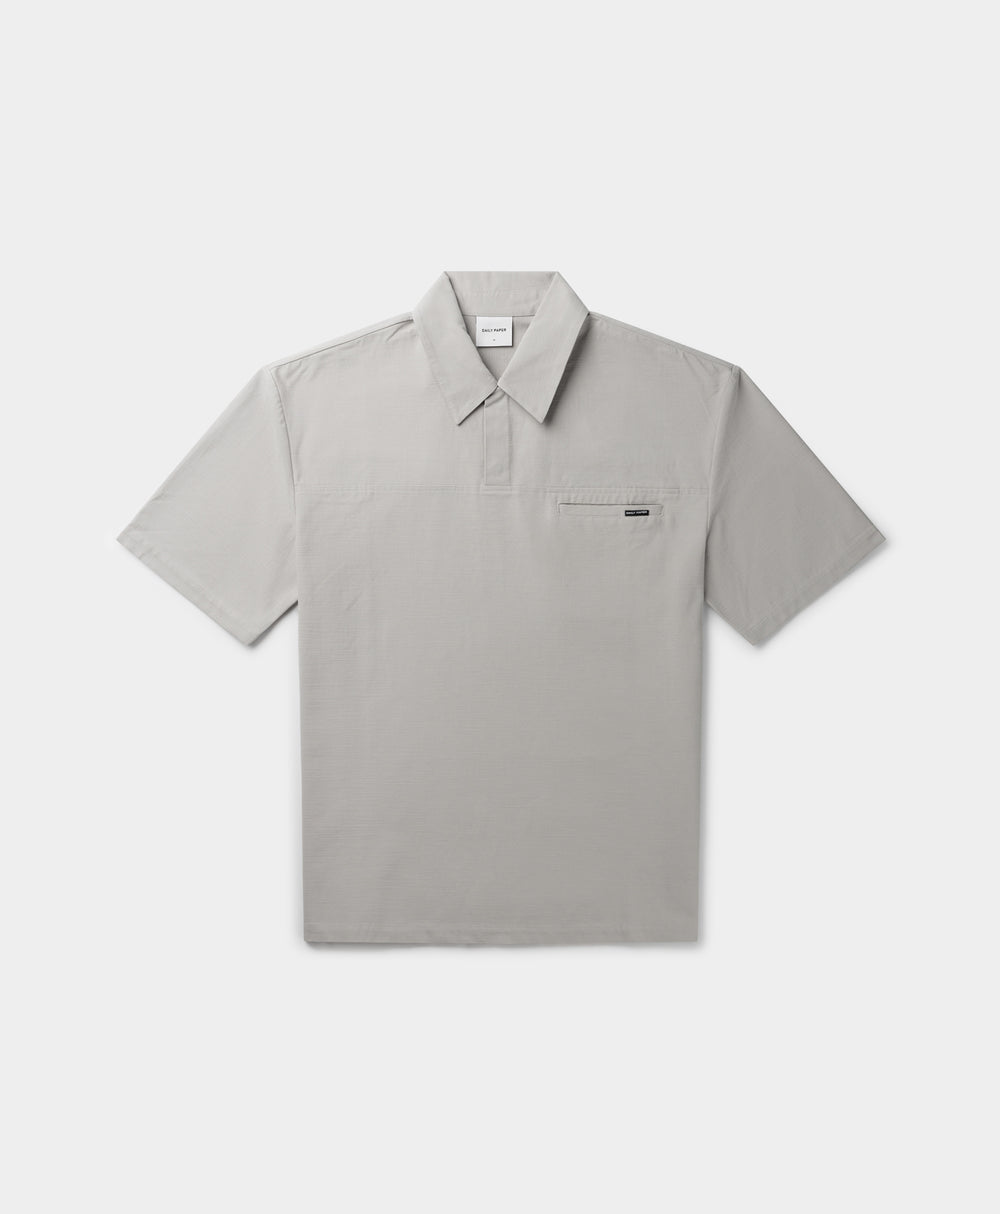 DP - Sleet Grey Dembe Relaxed Shirt - Packshot - Front